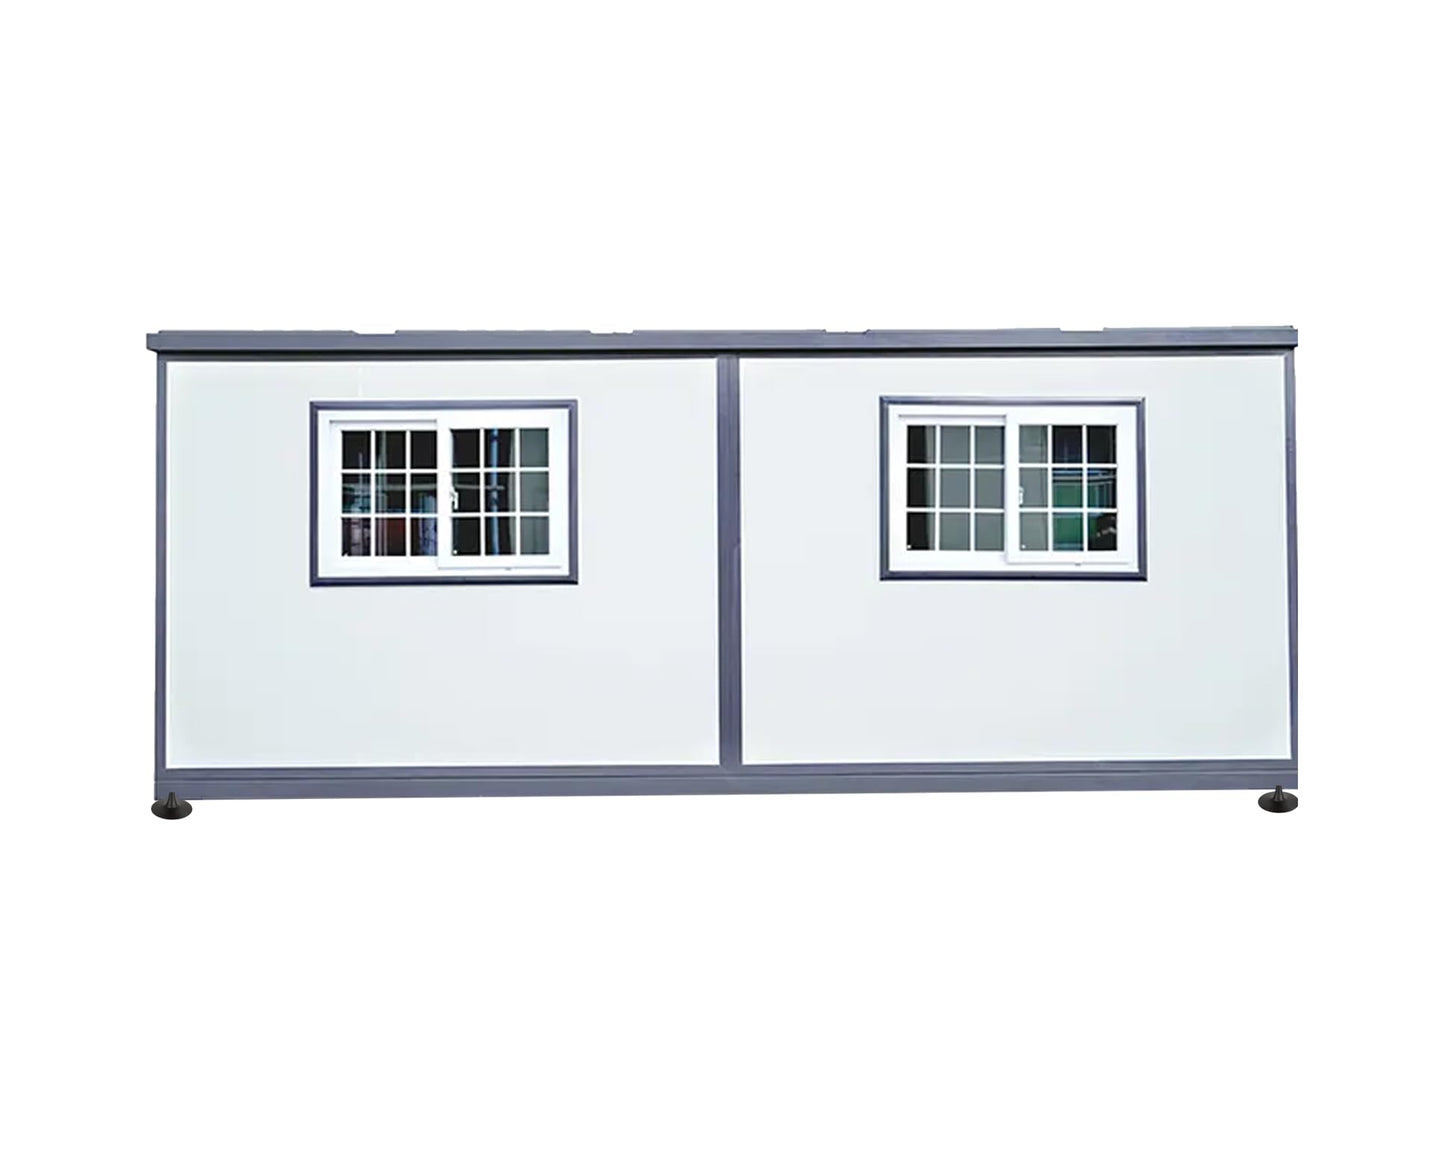 Portable Prefabricated Tiny Home, Mobile Expandable Prefab House, Prefab Folding Container House Expandable Container Home, Mobile House (20X40)